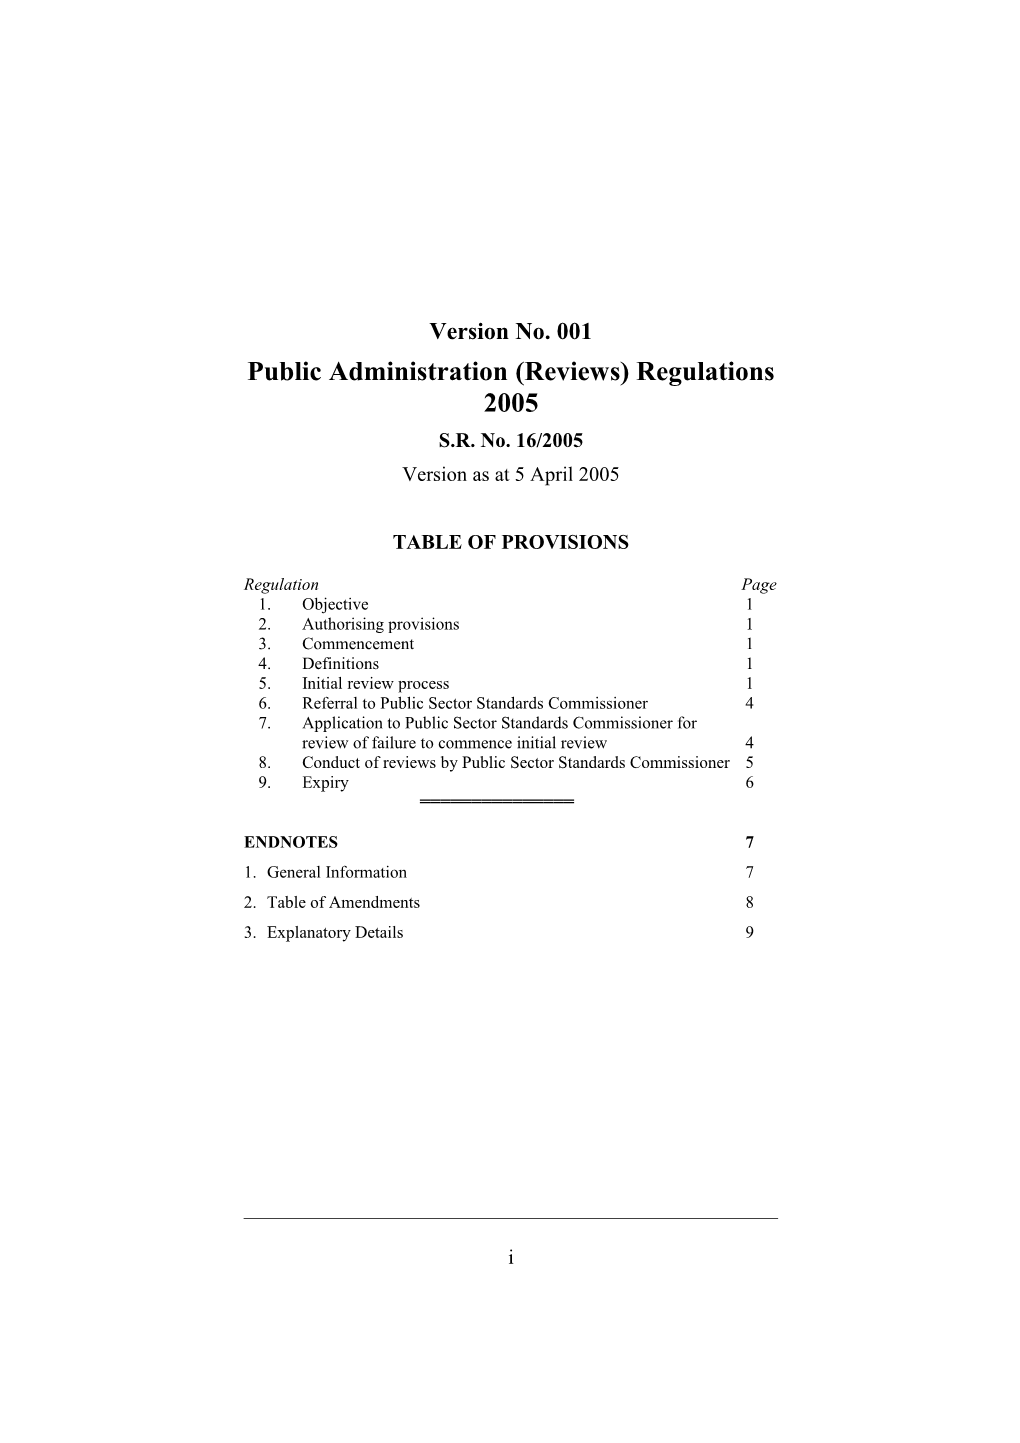 Public Administration (Reviews) Regulations 2005